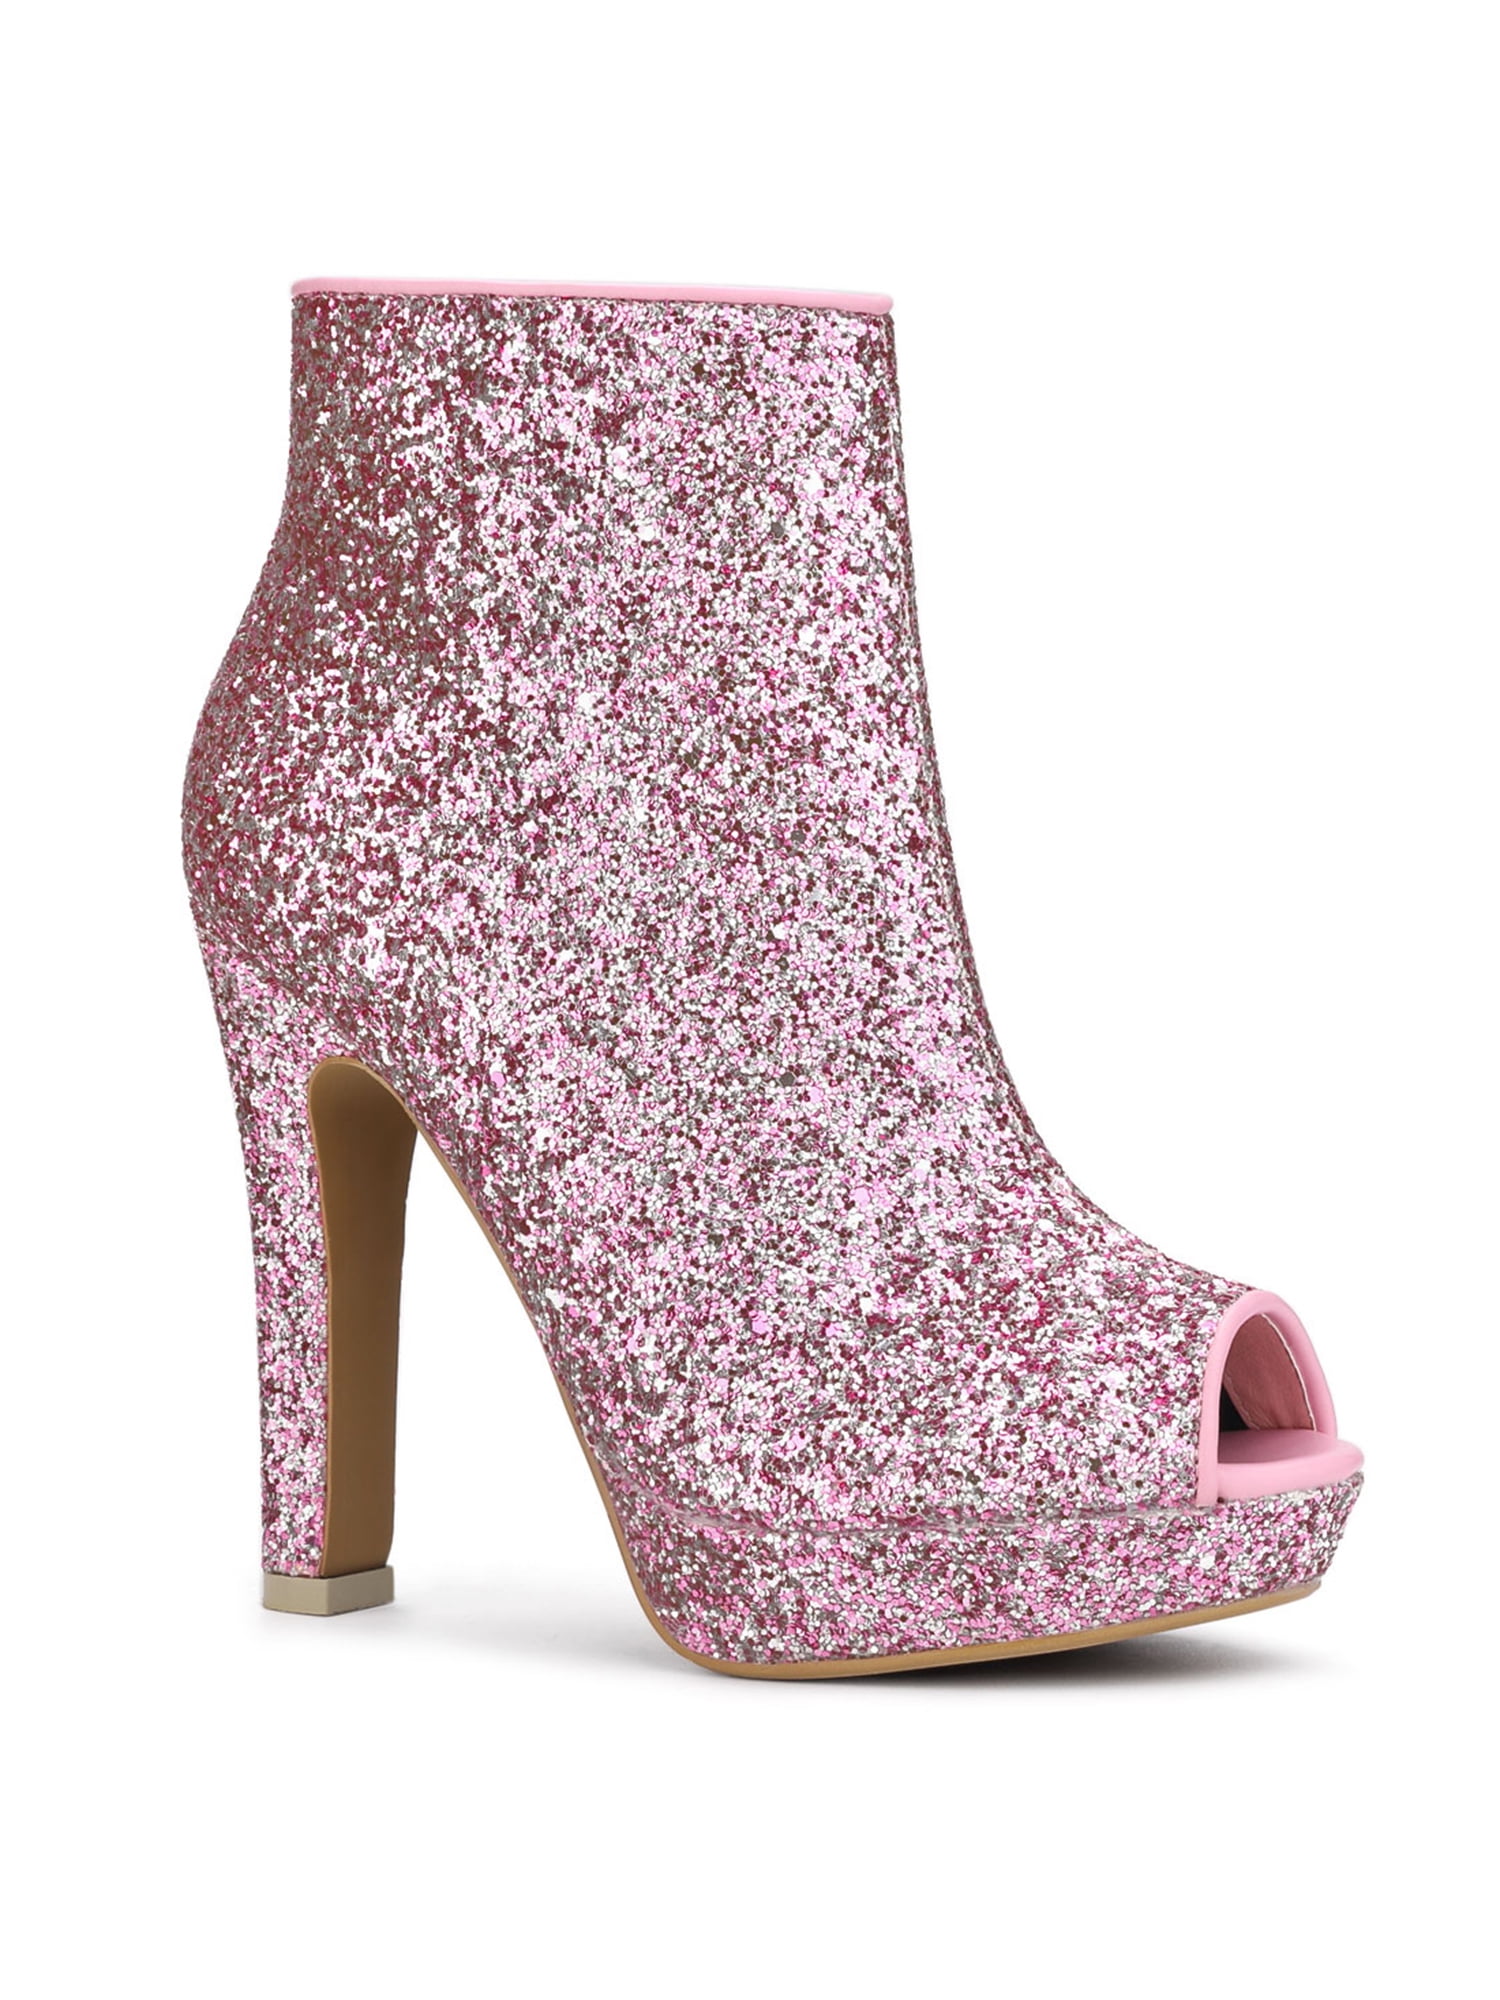 Elegant Hot Pink Glitter High Heel Shoes Cutout | Zazzle